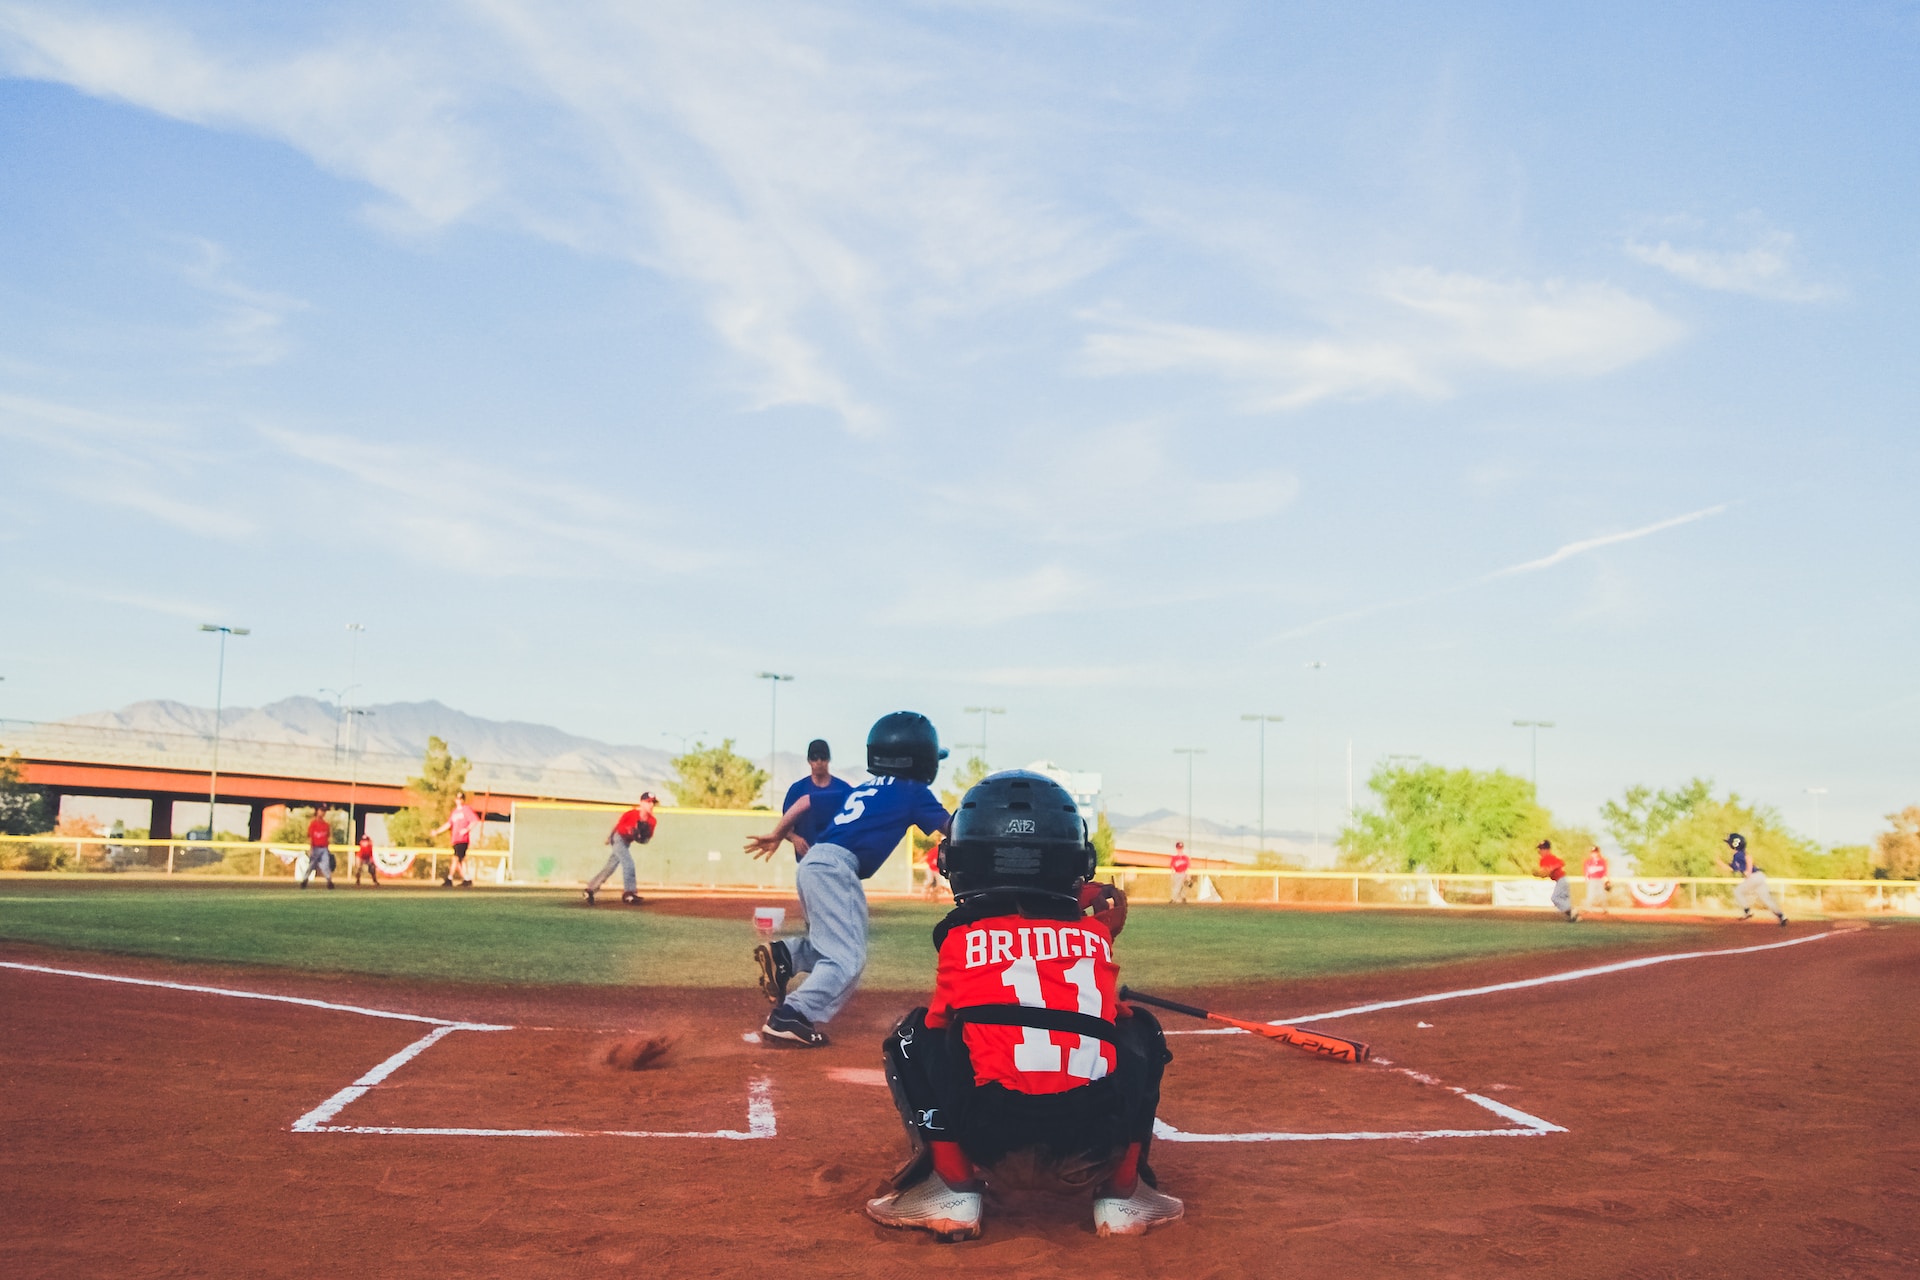 children playing baseball - Opportunity4Kids Arizona